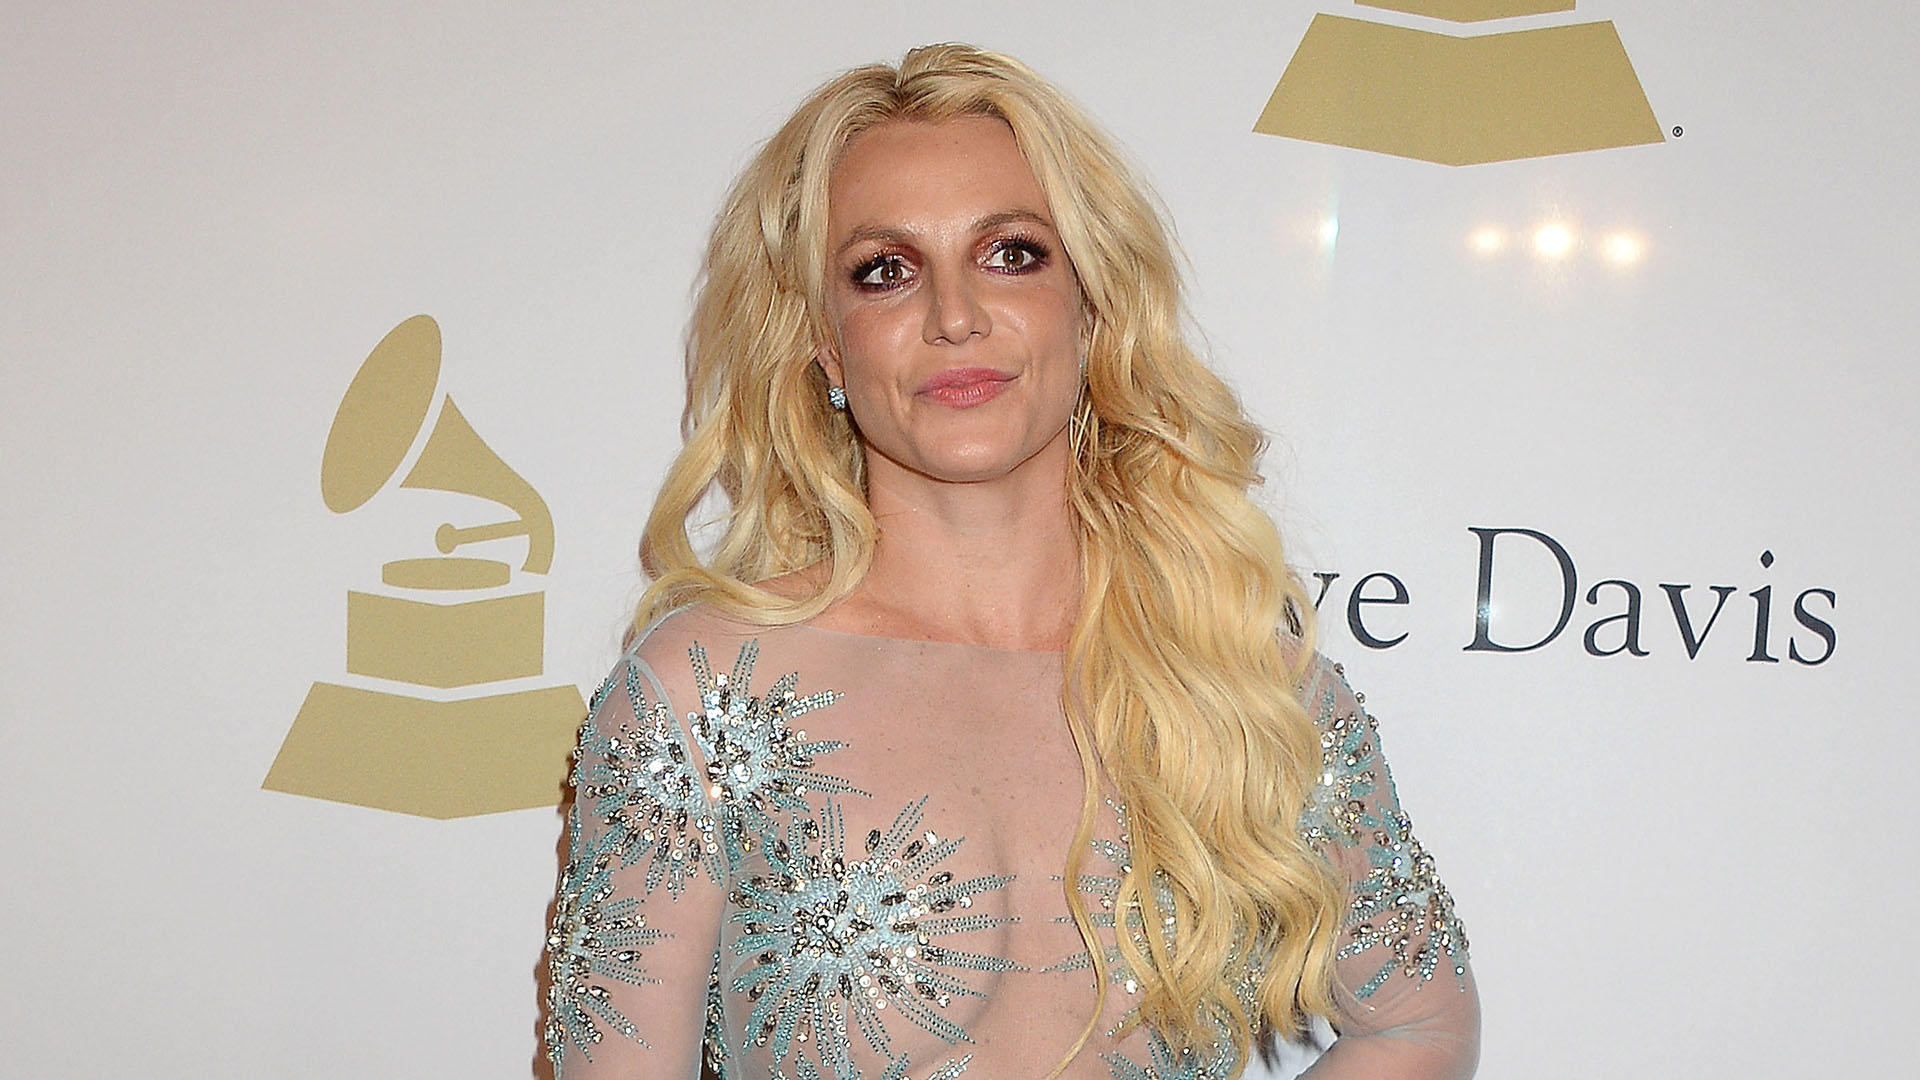 Singer Britney Spears attending Clive Davis pre-Grammy Gala